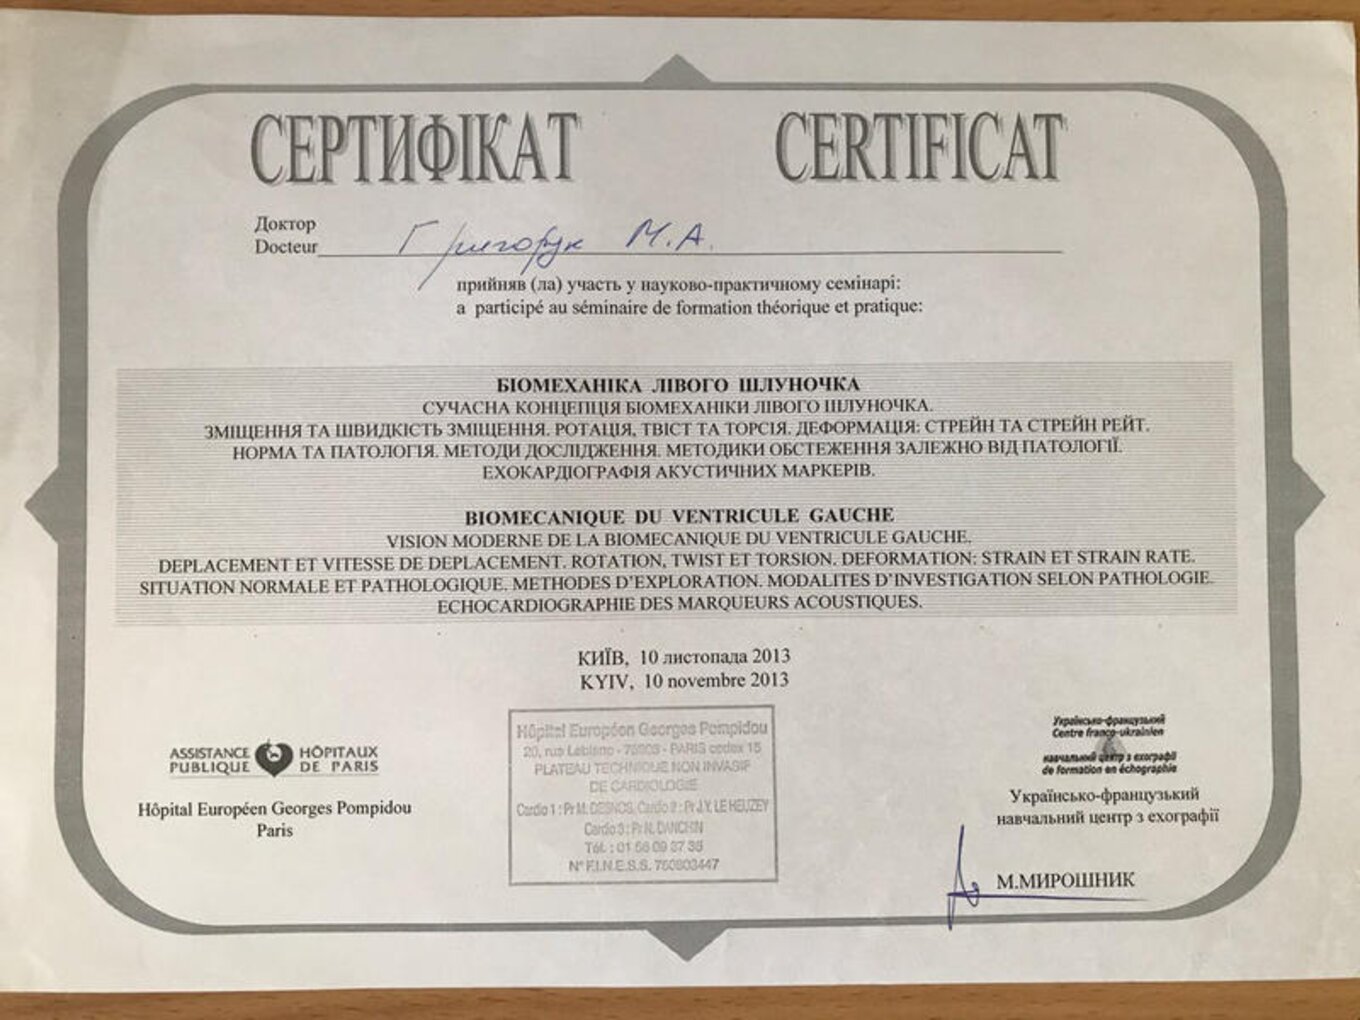 certificates/grigoruk-maksim-antonovich/hemomedika-cert-grigoruk-10.jpg